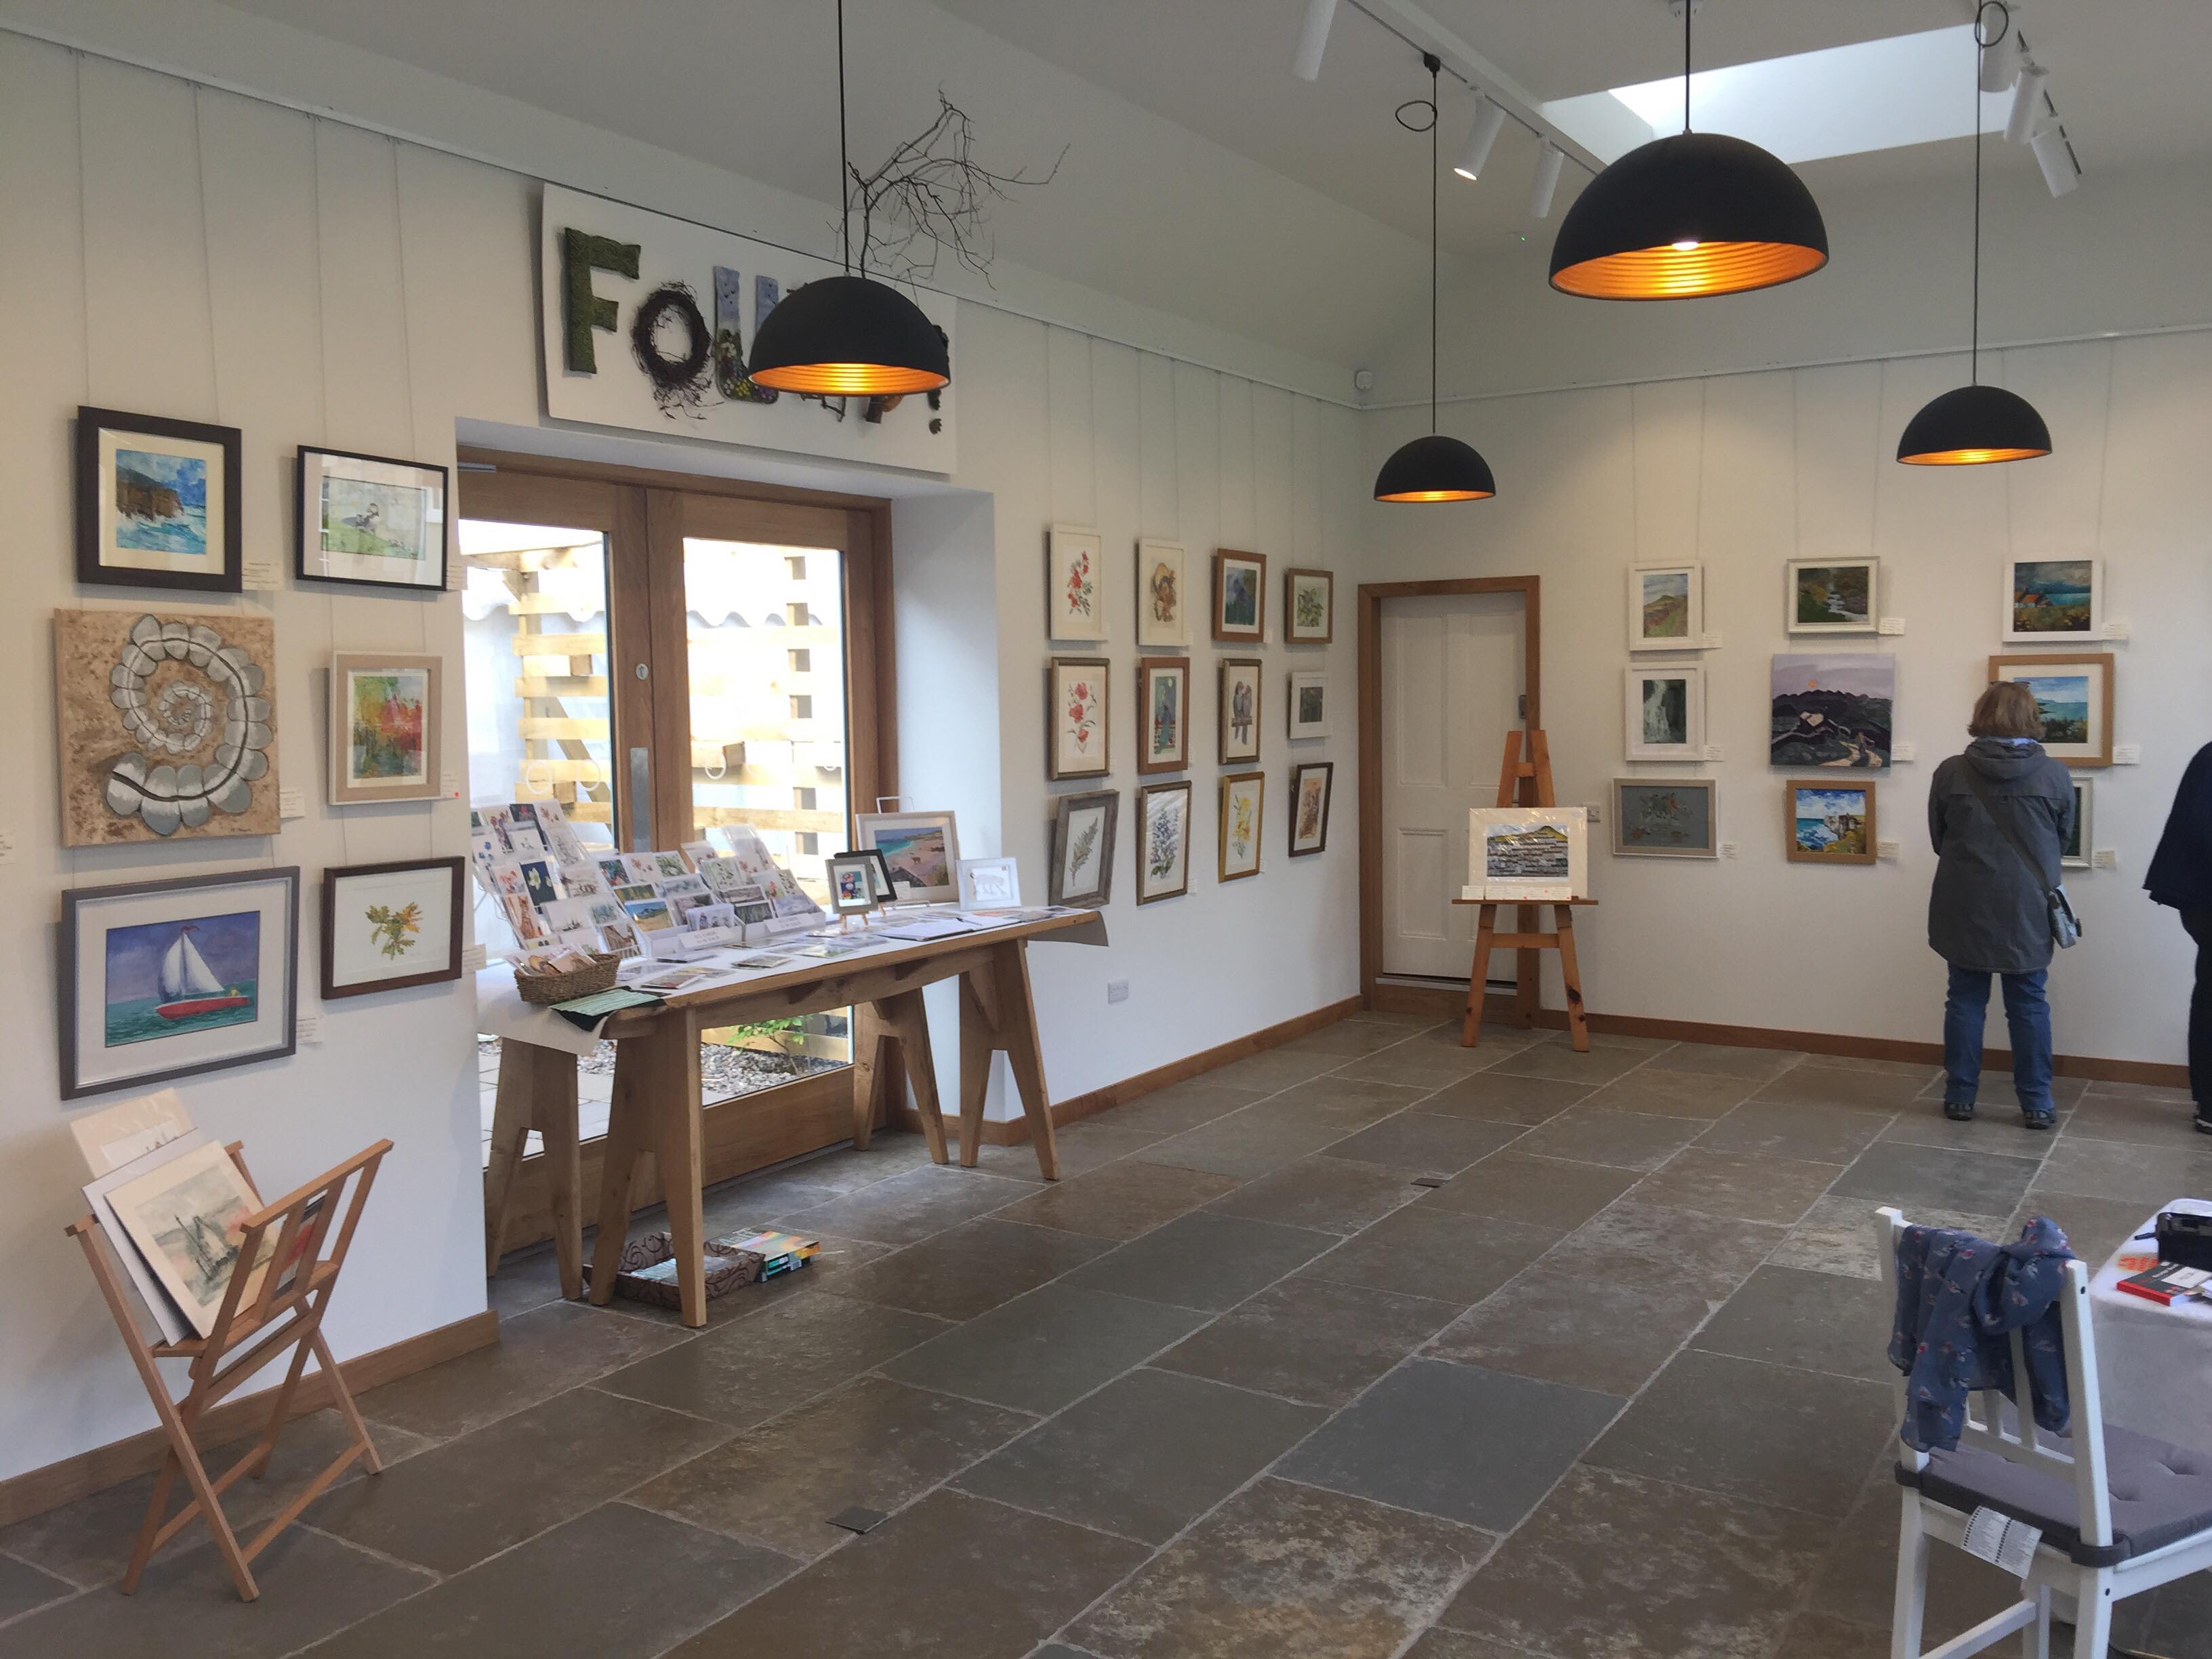 Gallery at Falkland Stewardship Trust